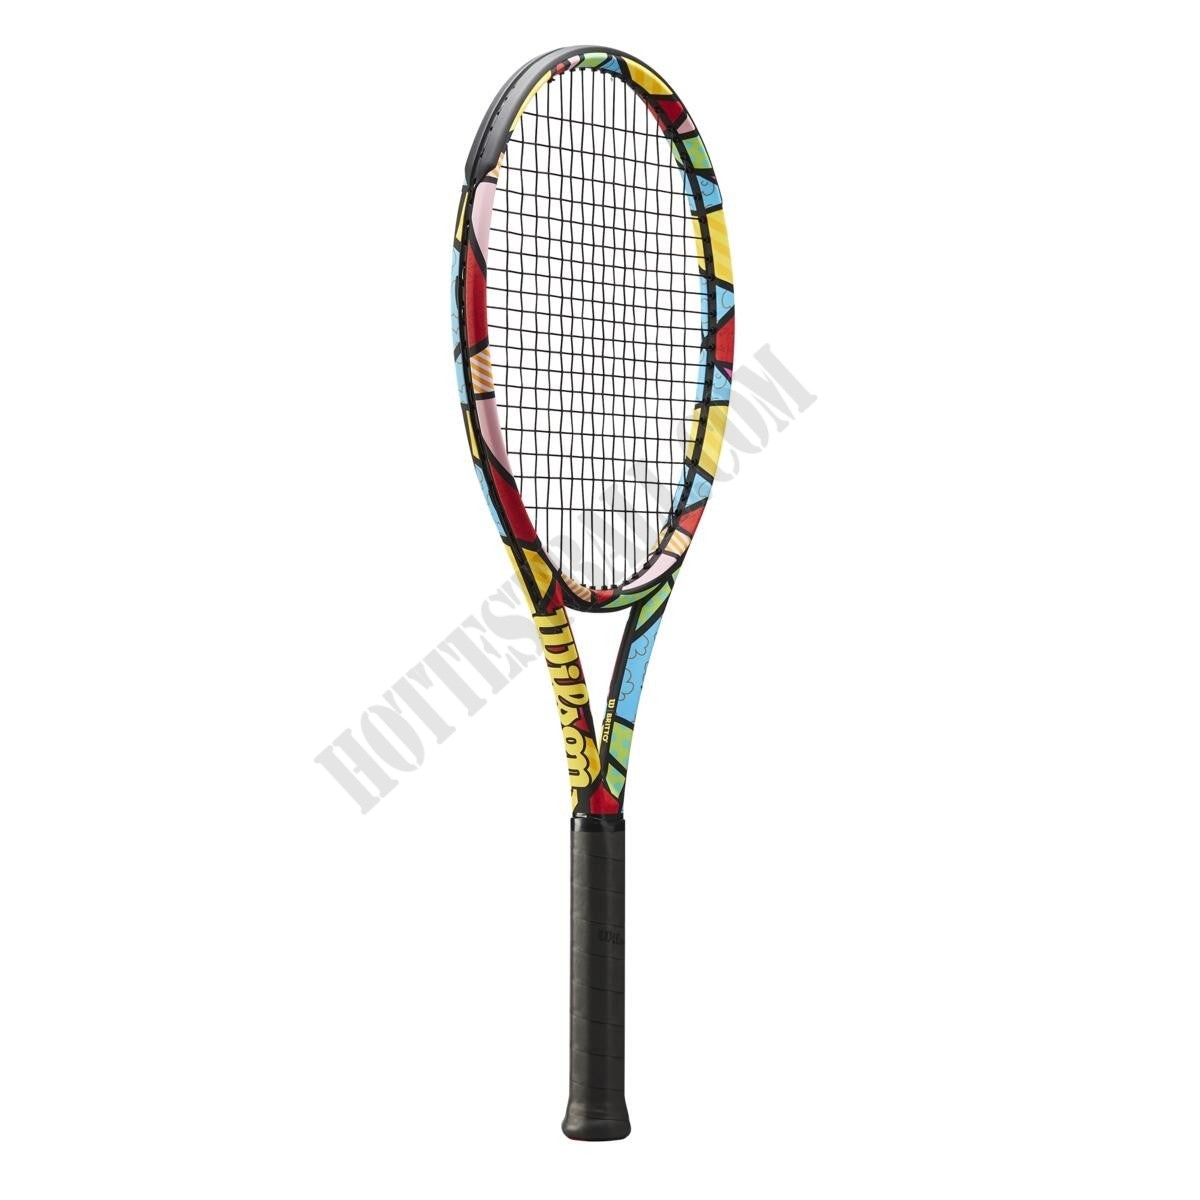 Britto Ultra 100 v3 Tennis Racket - Pre-strung - Wilson Discount Store - Britto Ultra 100 v3 Tennis Racket - Pre-strung - Wilson Discount Store